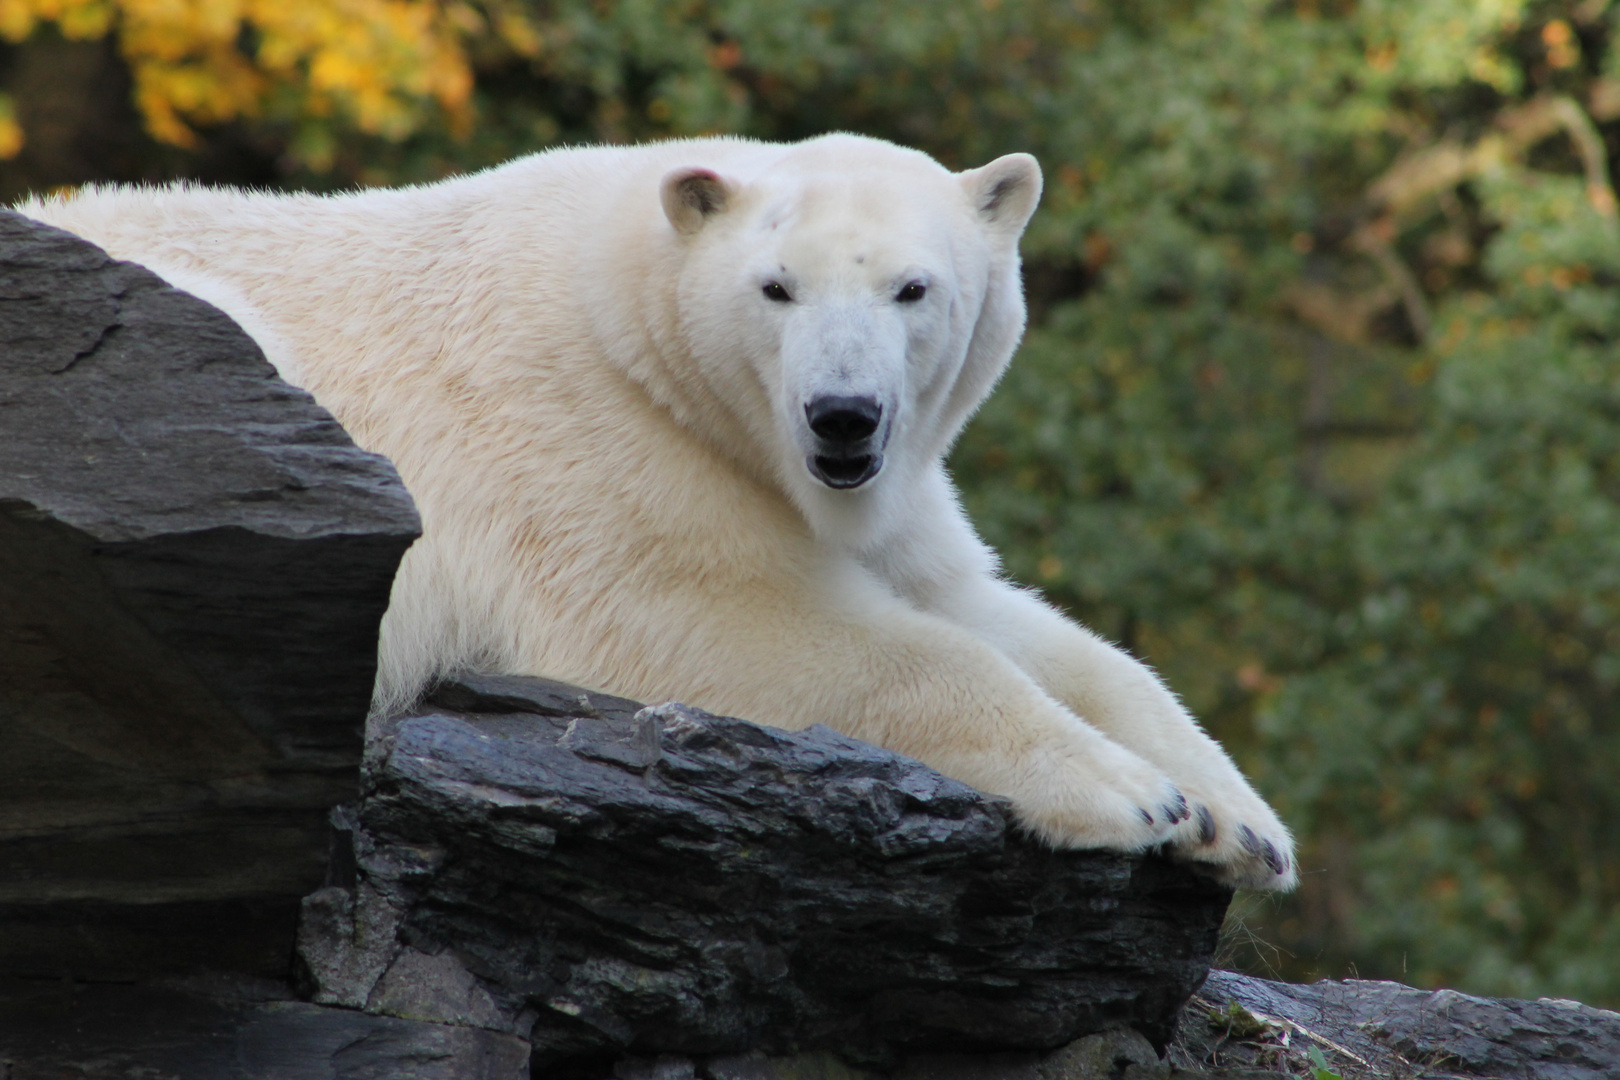 Eisbär im Tierpark Friedrichsfelde